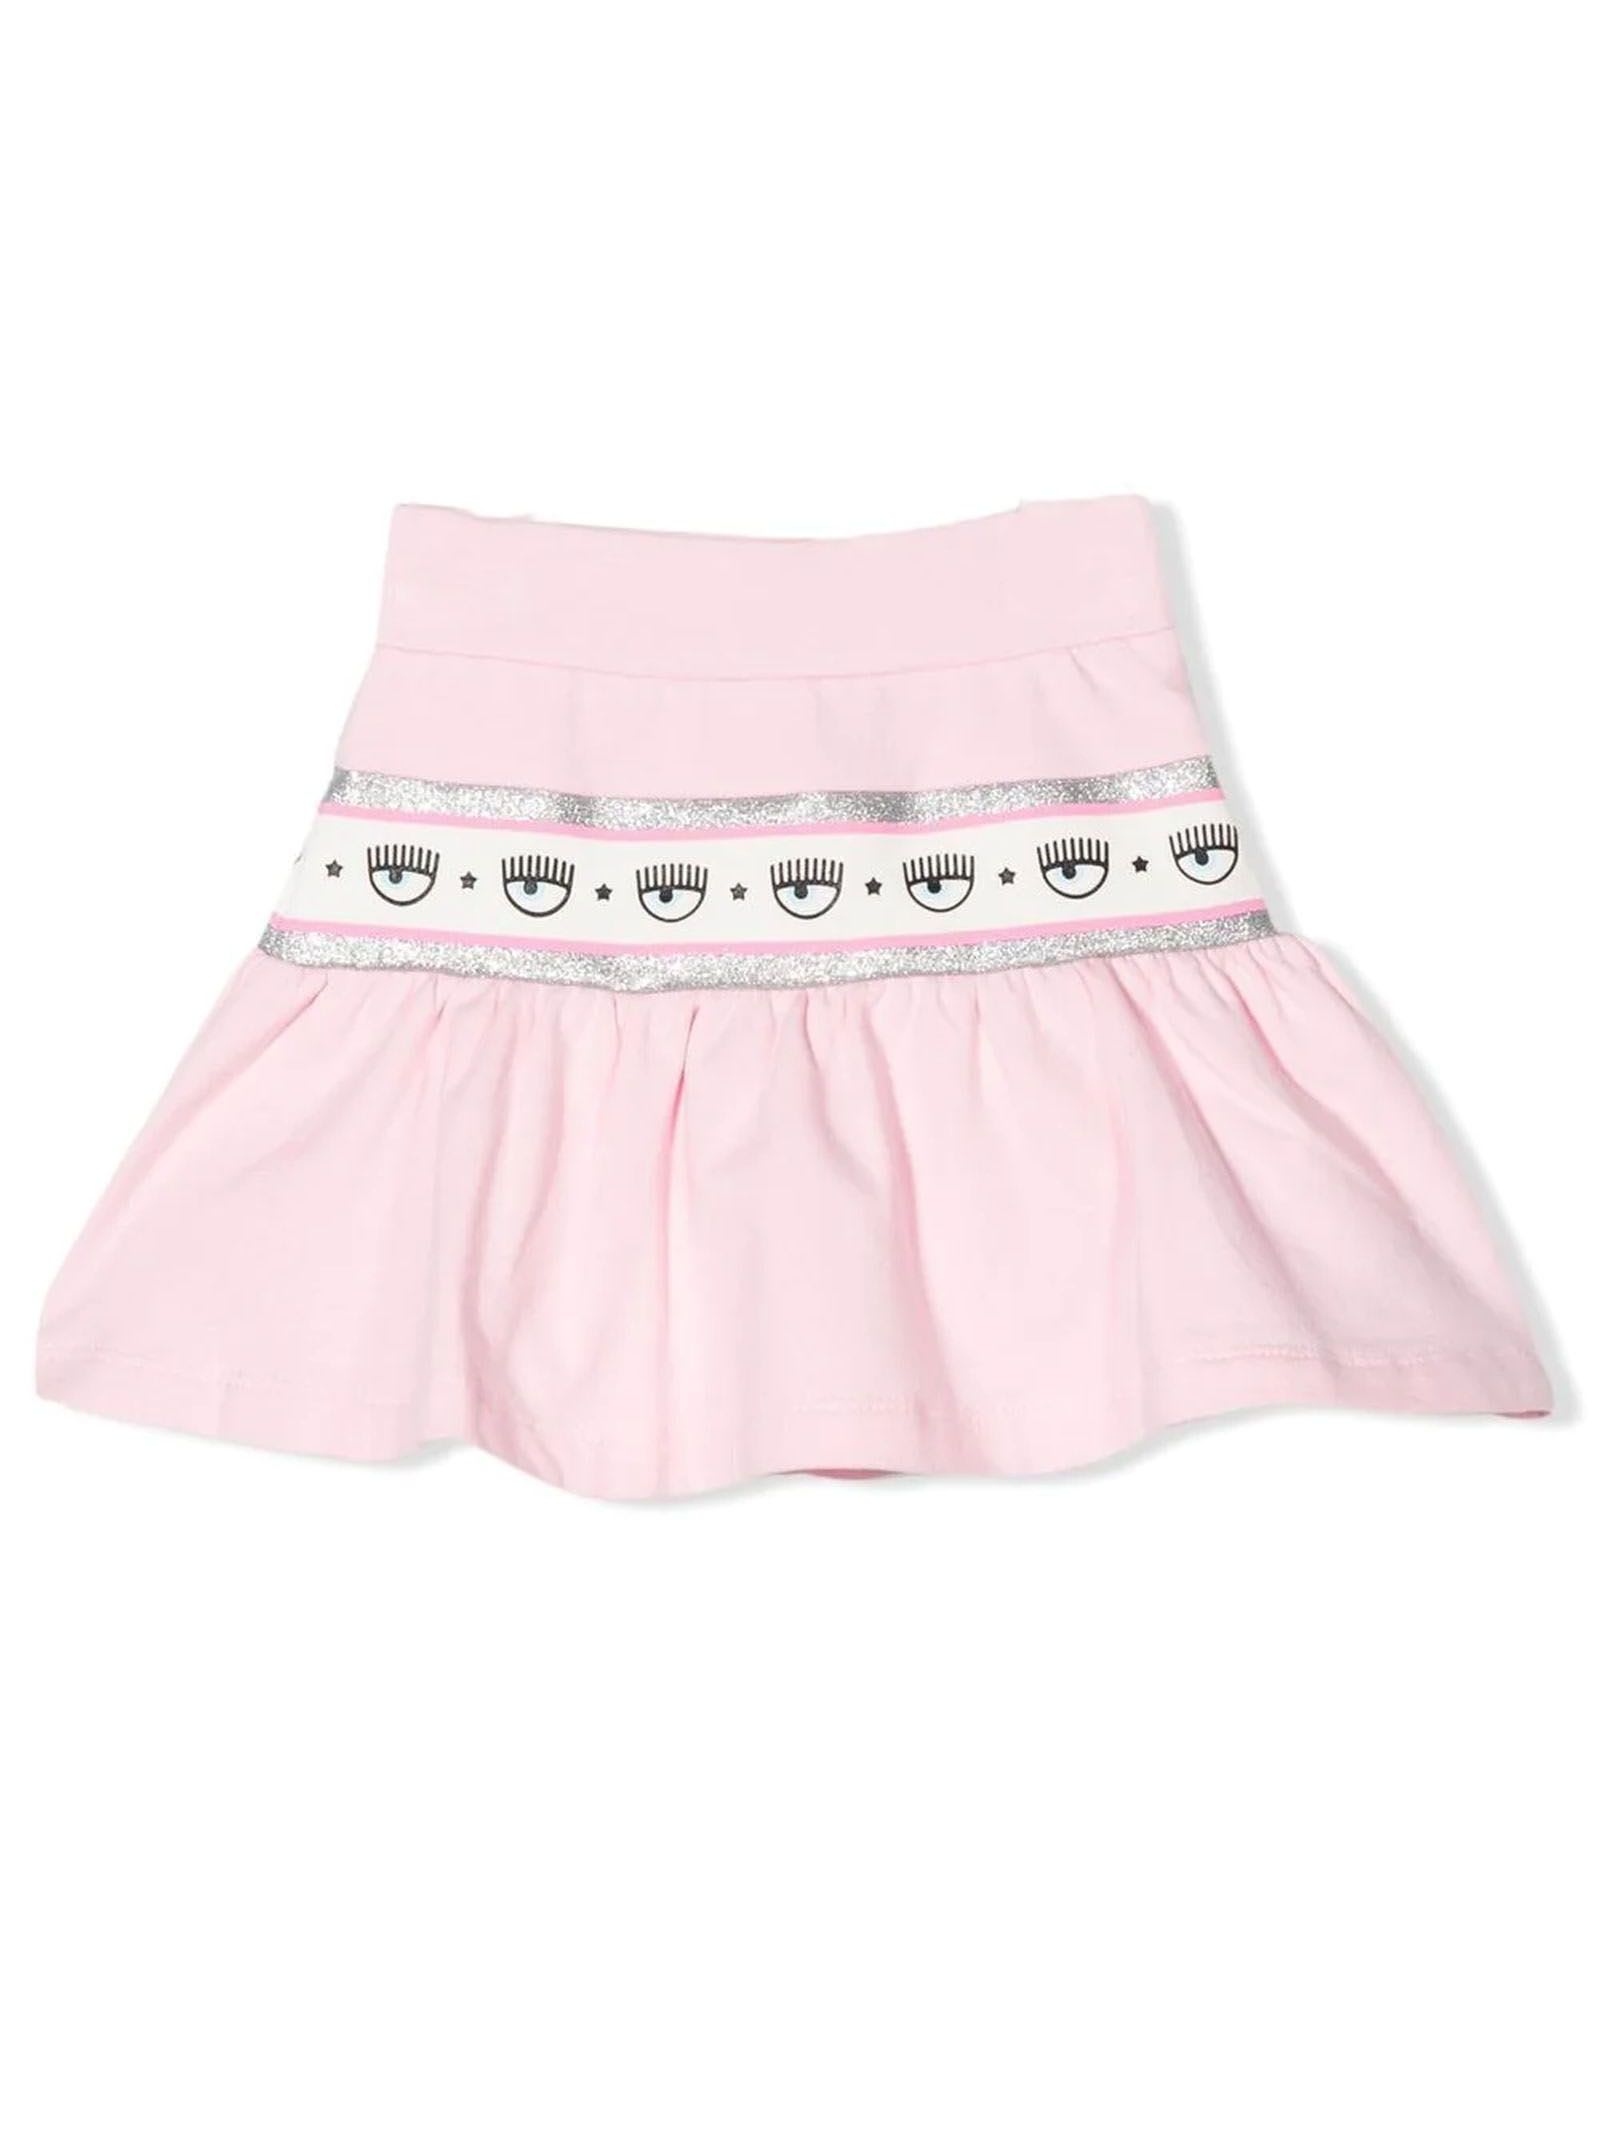 Chiara Ferragni Pink Cotton Skirt